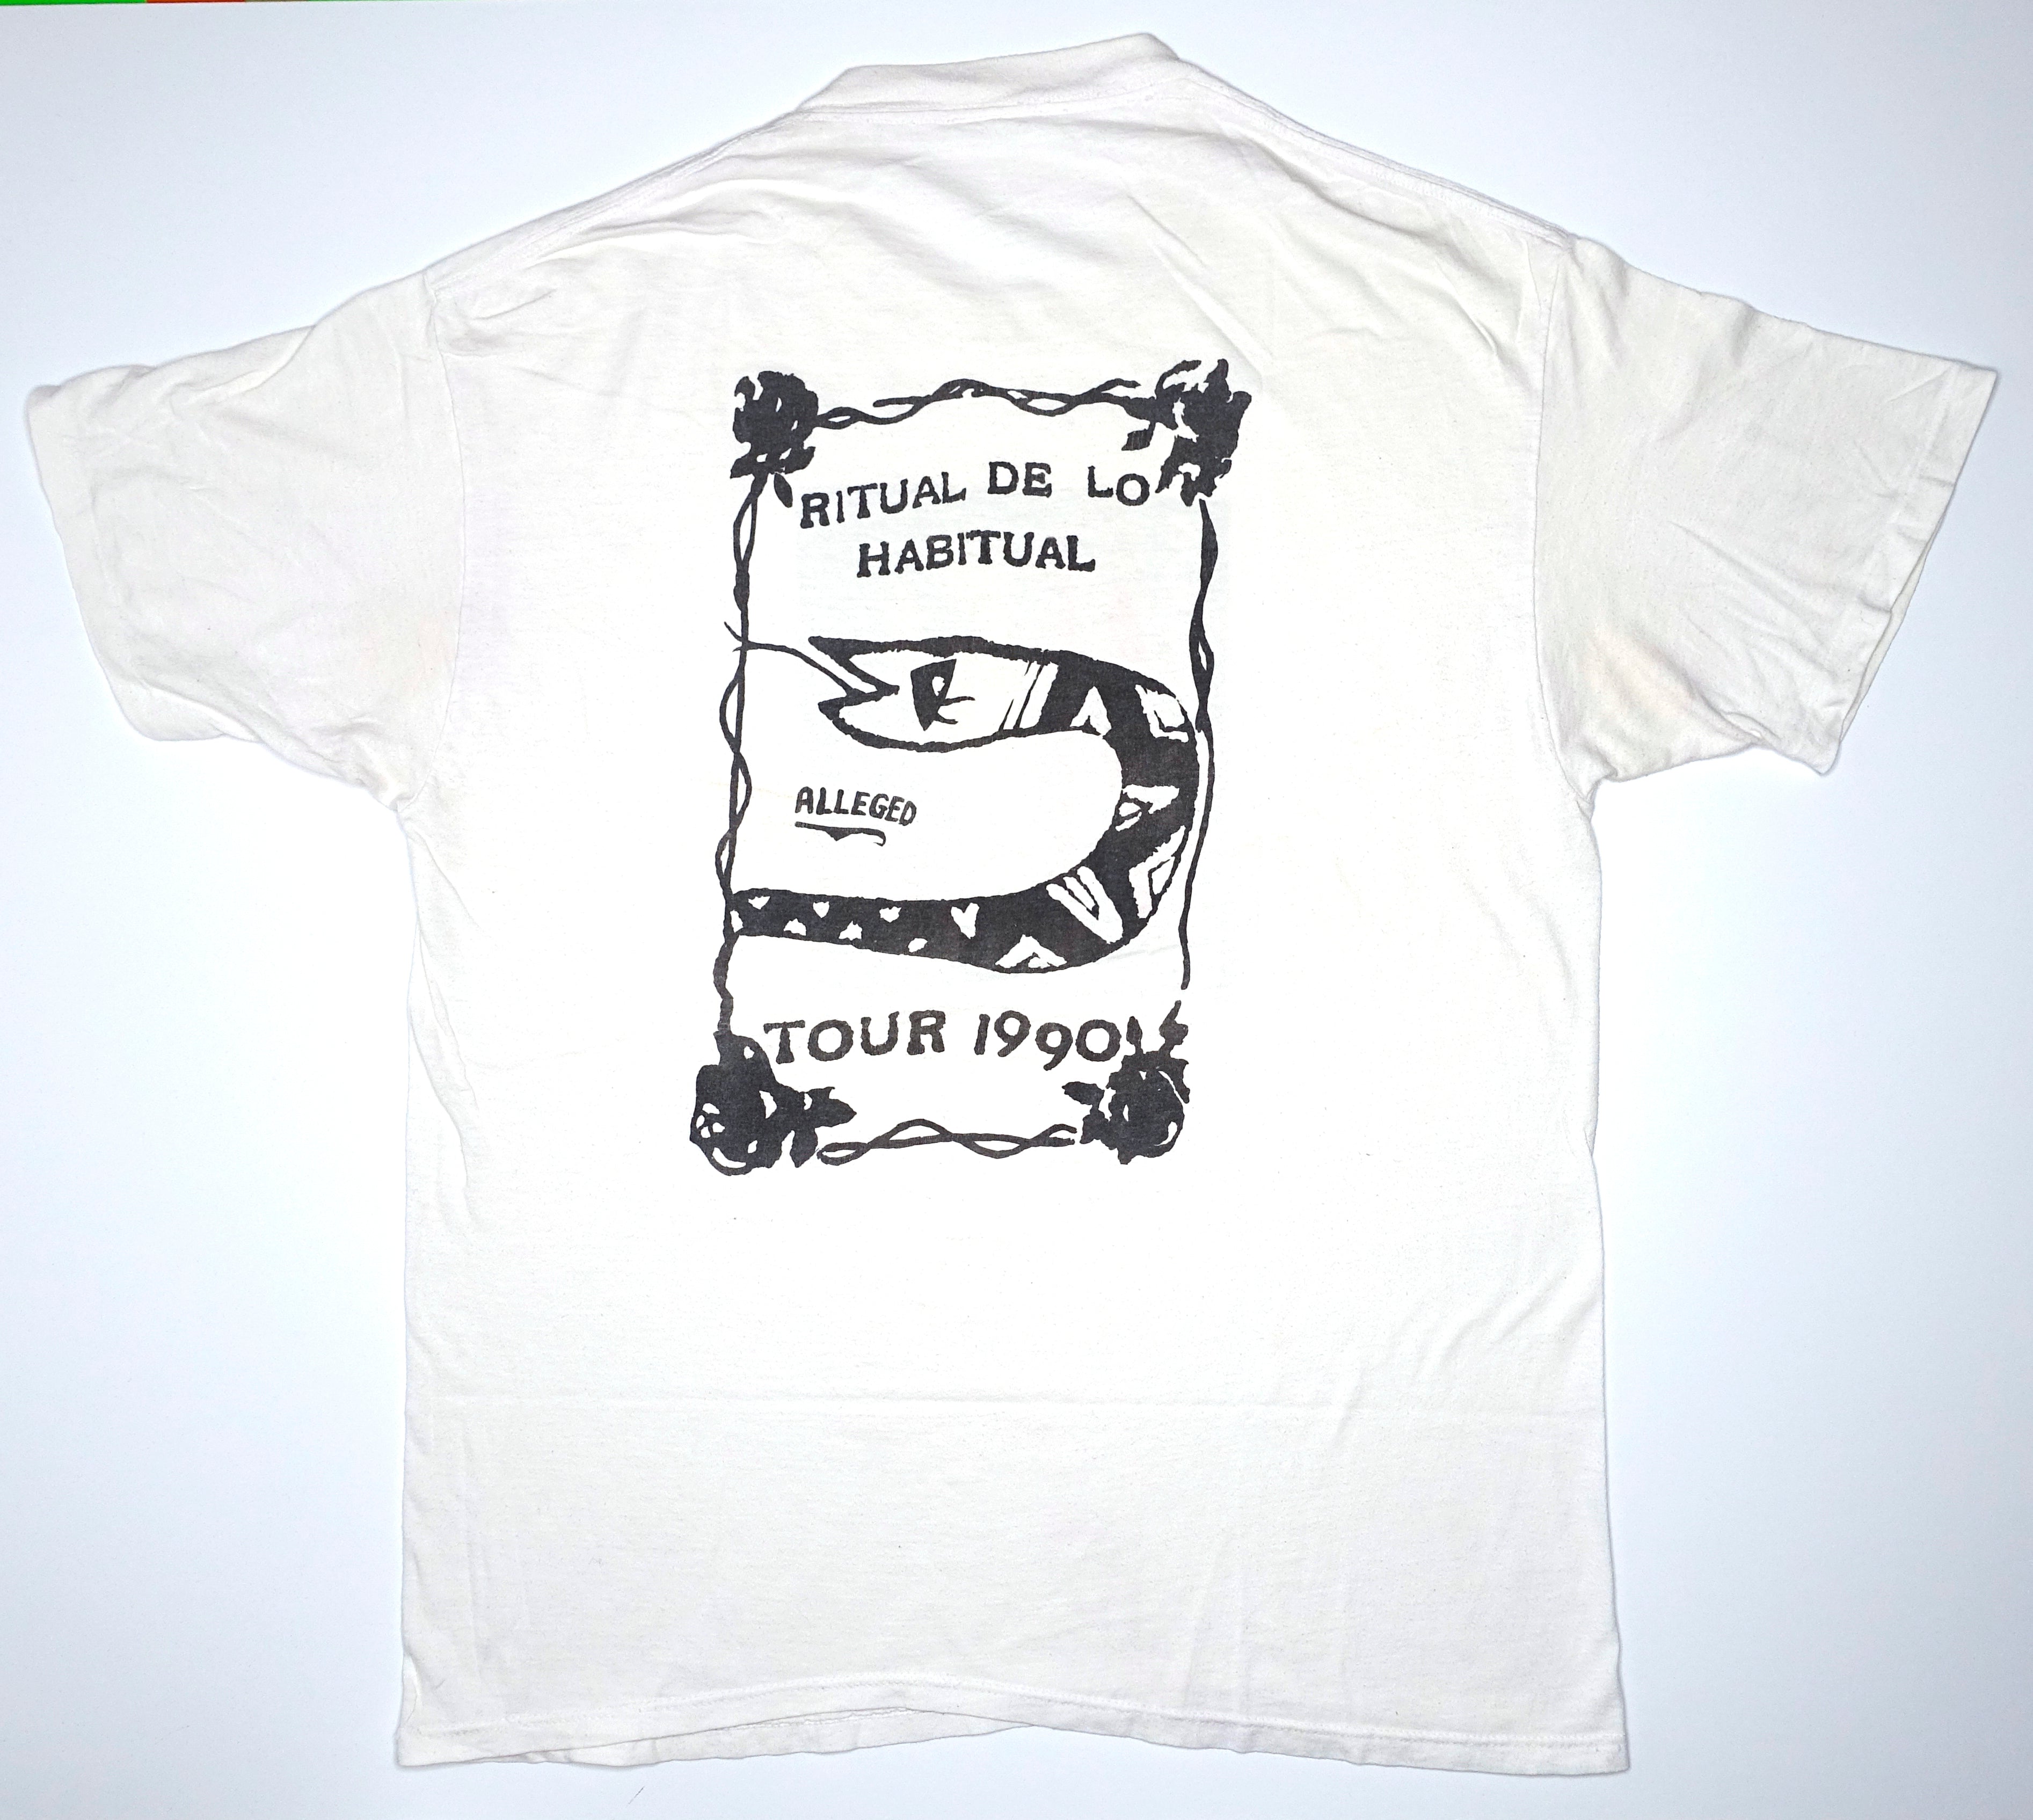 Jane's Addiction - Ritual De Lo Habitual / Alleged 1990 Tour Shirt Size XL